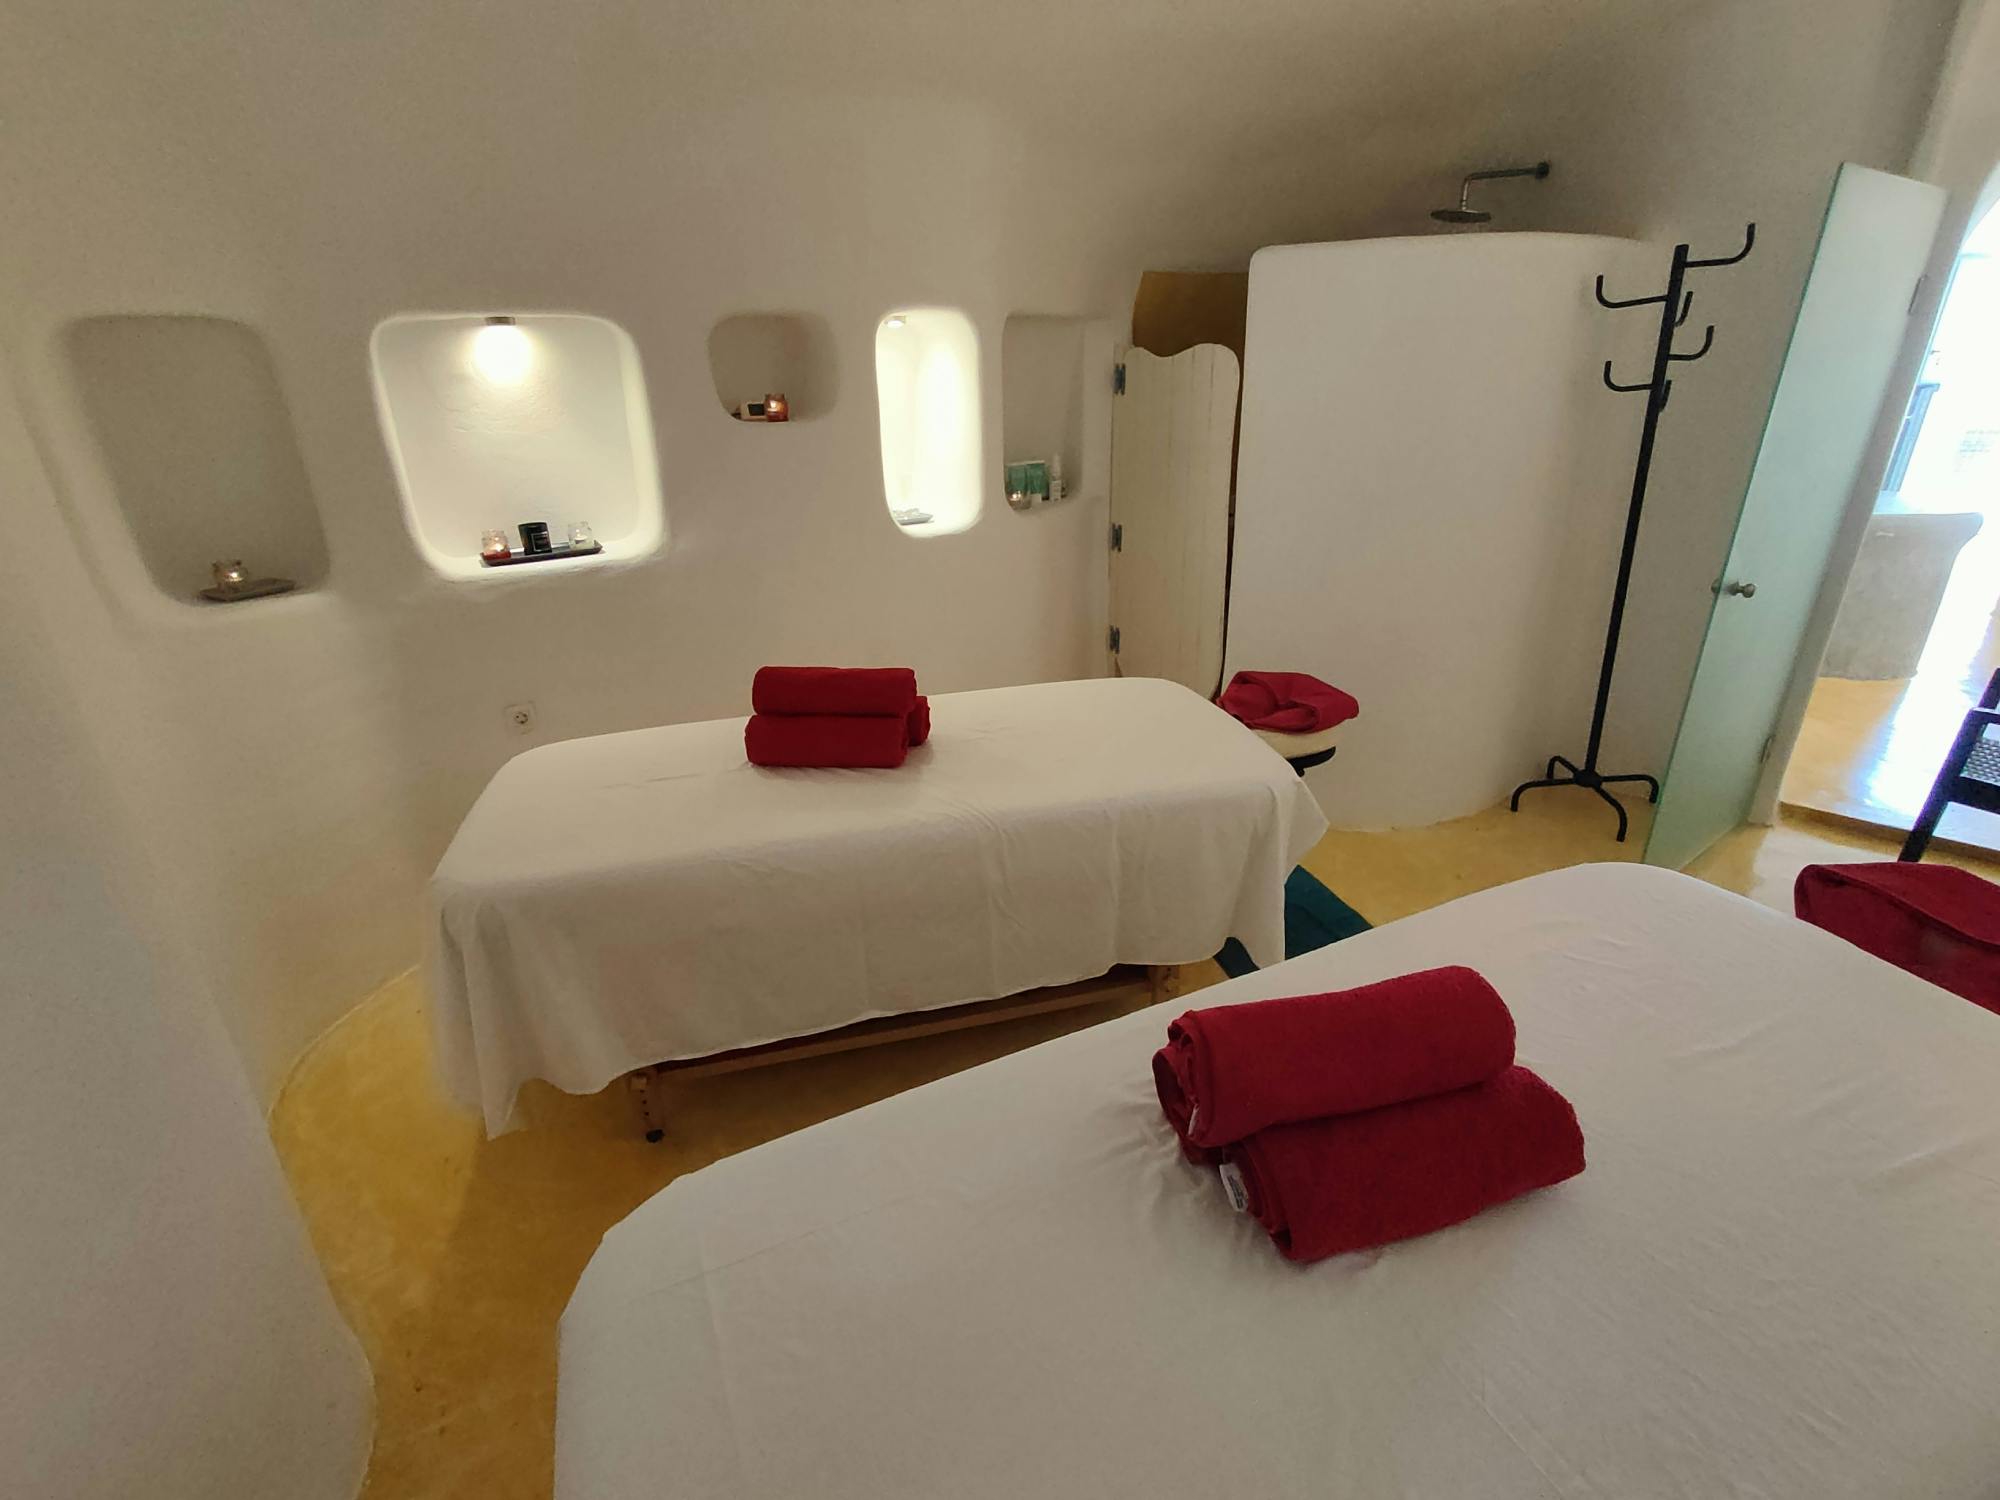 Masaje de aromaterapia para parejas en Santorini